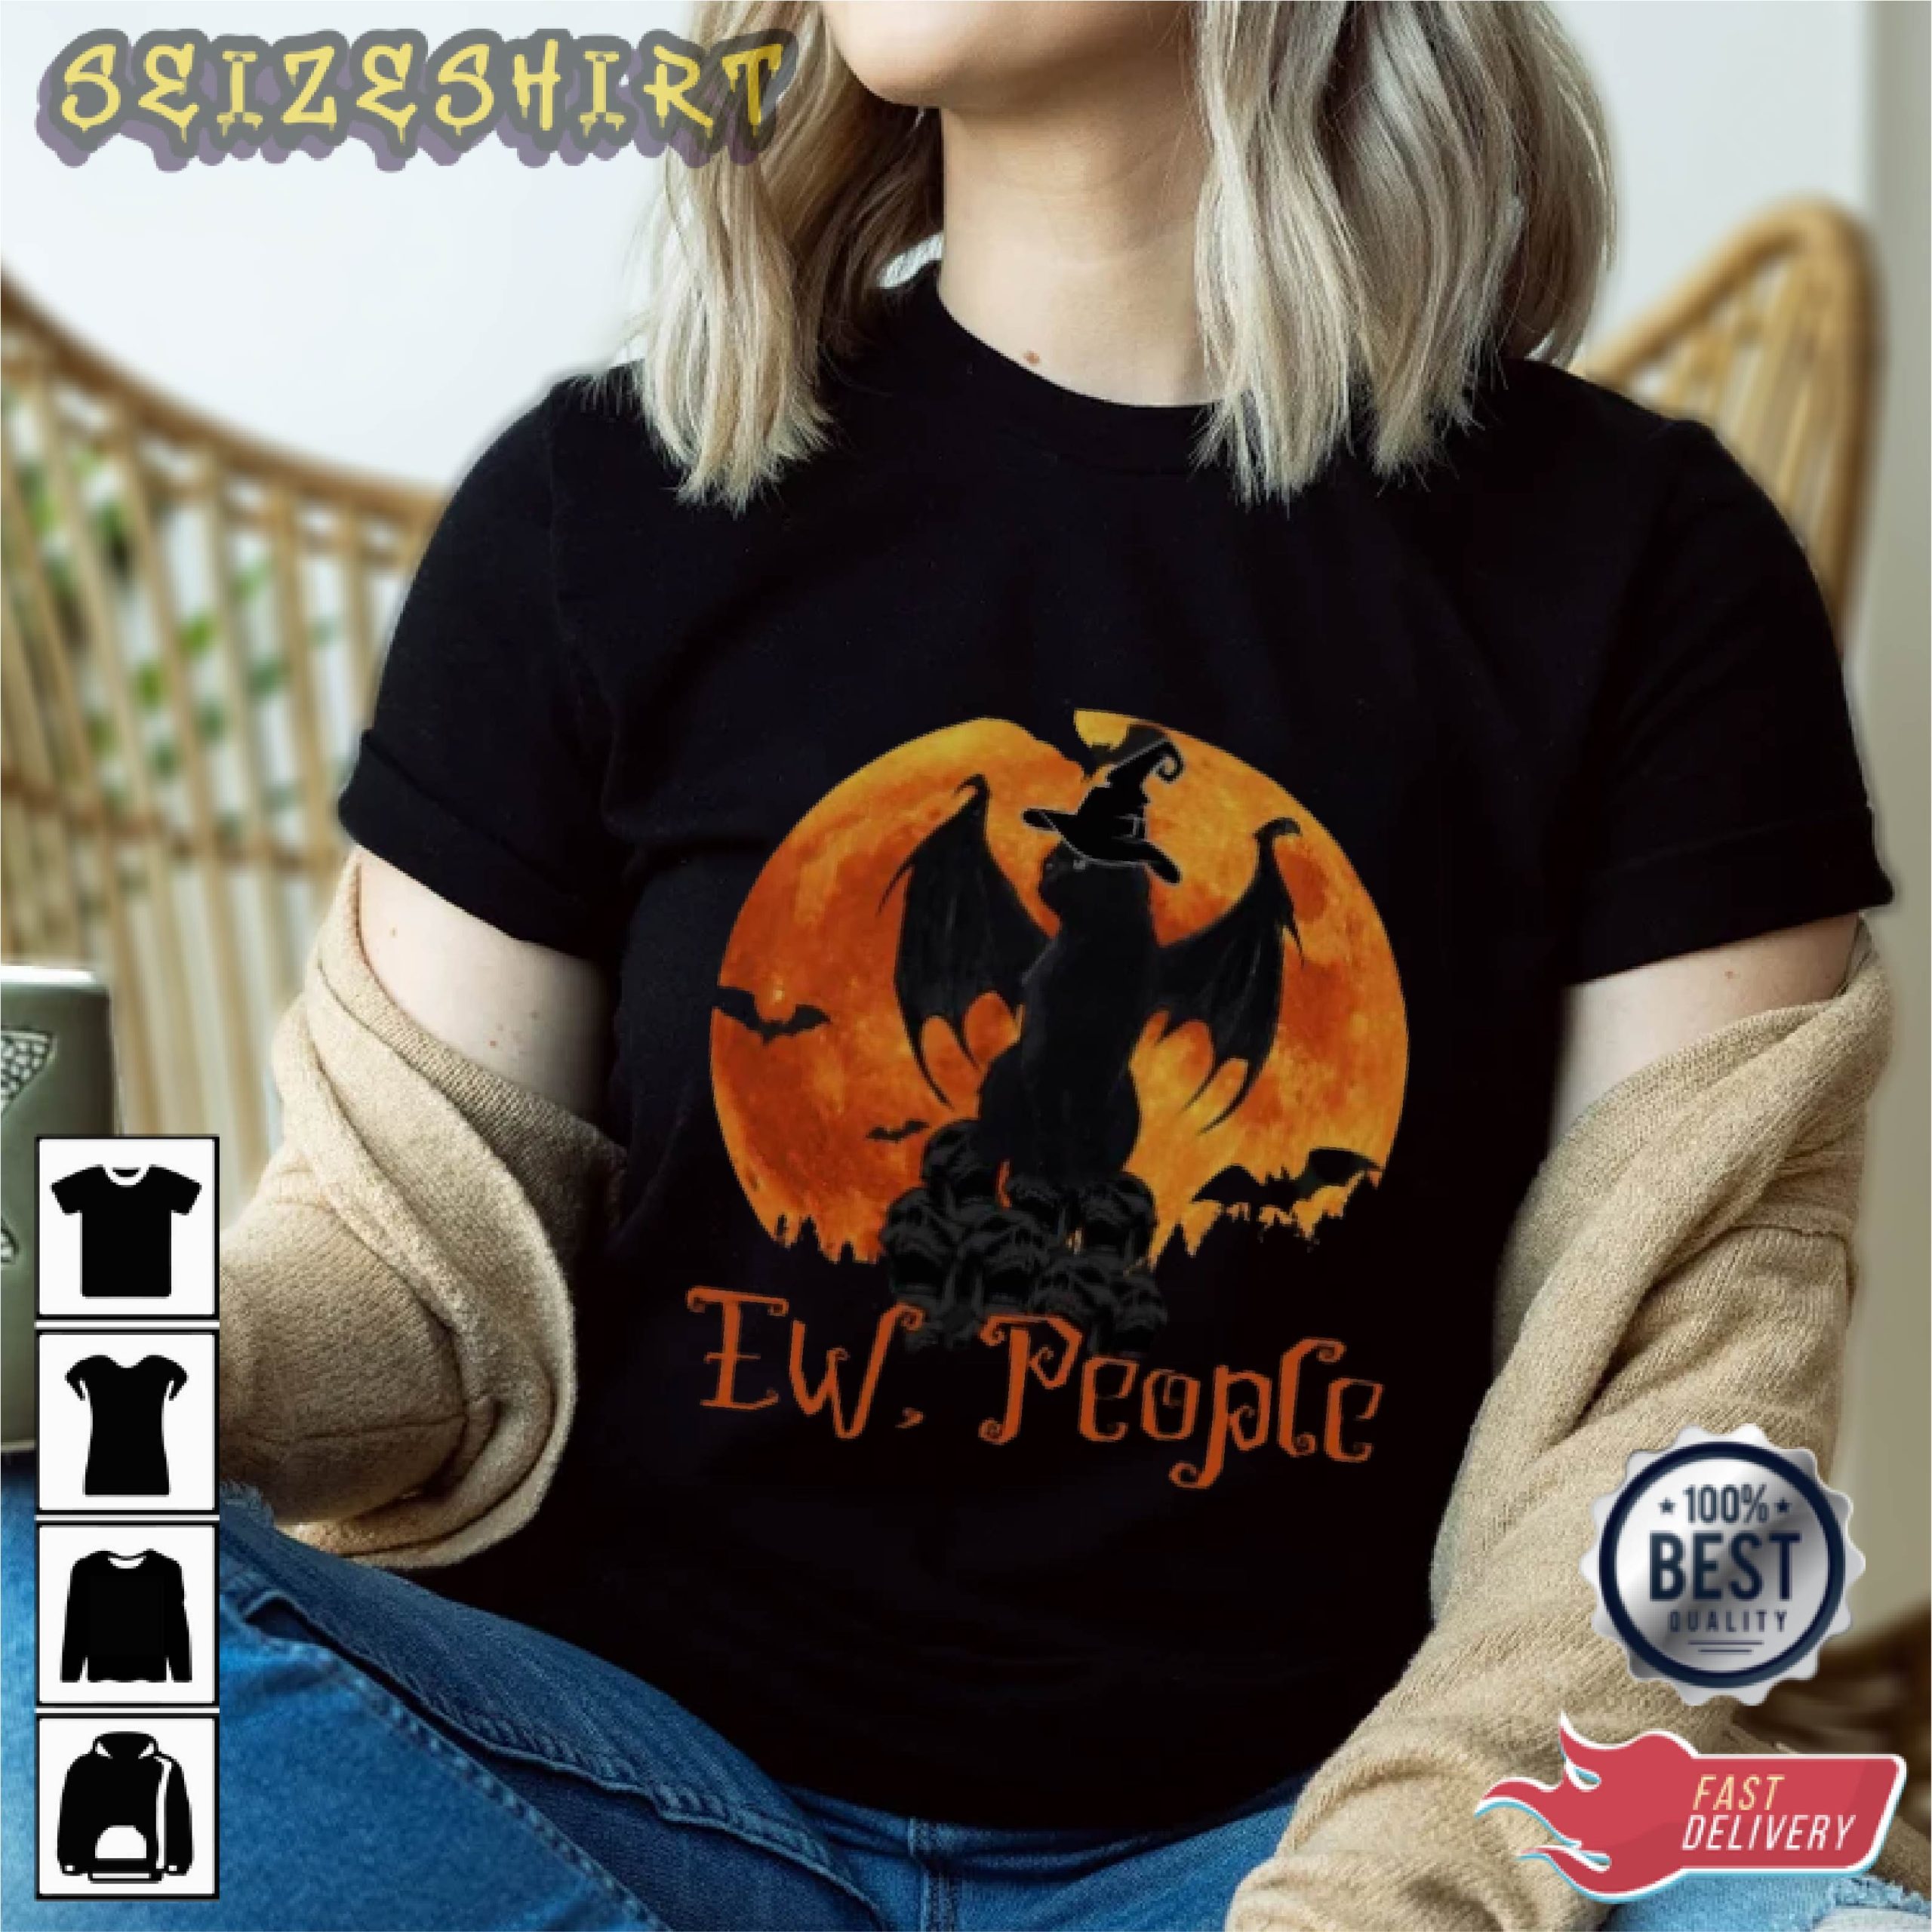 Black Dragon Cat Halloween Graphic Tee